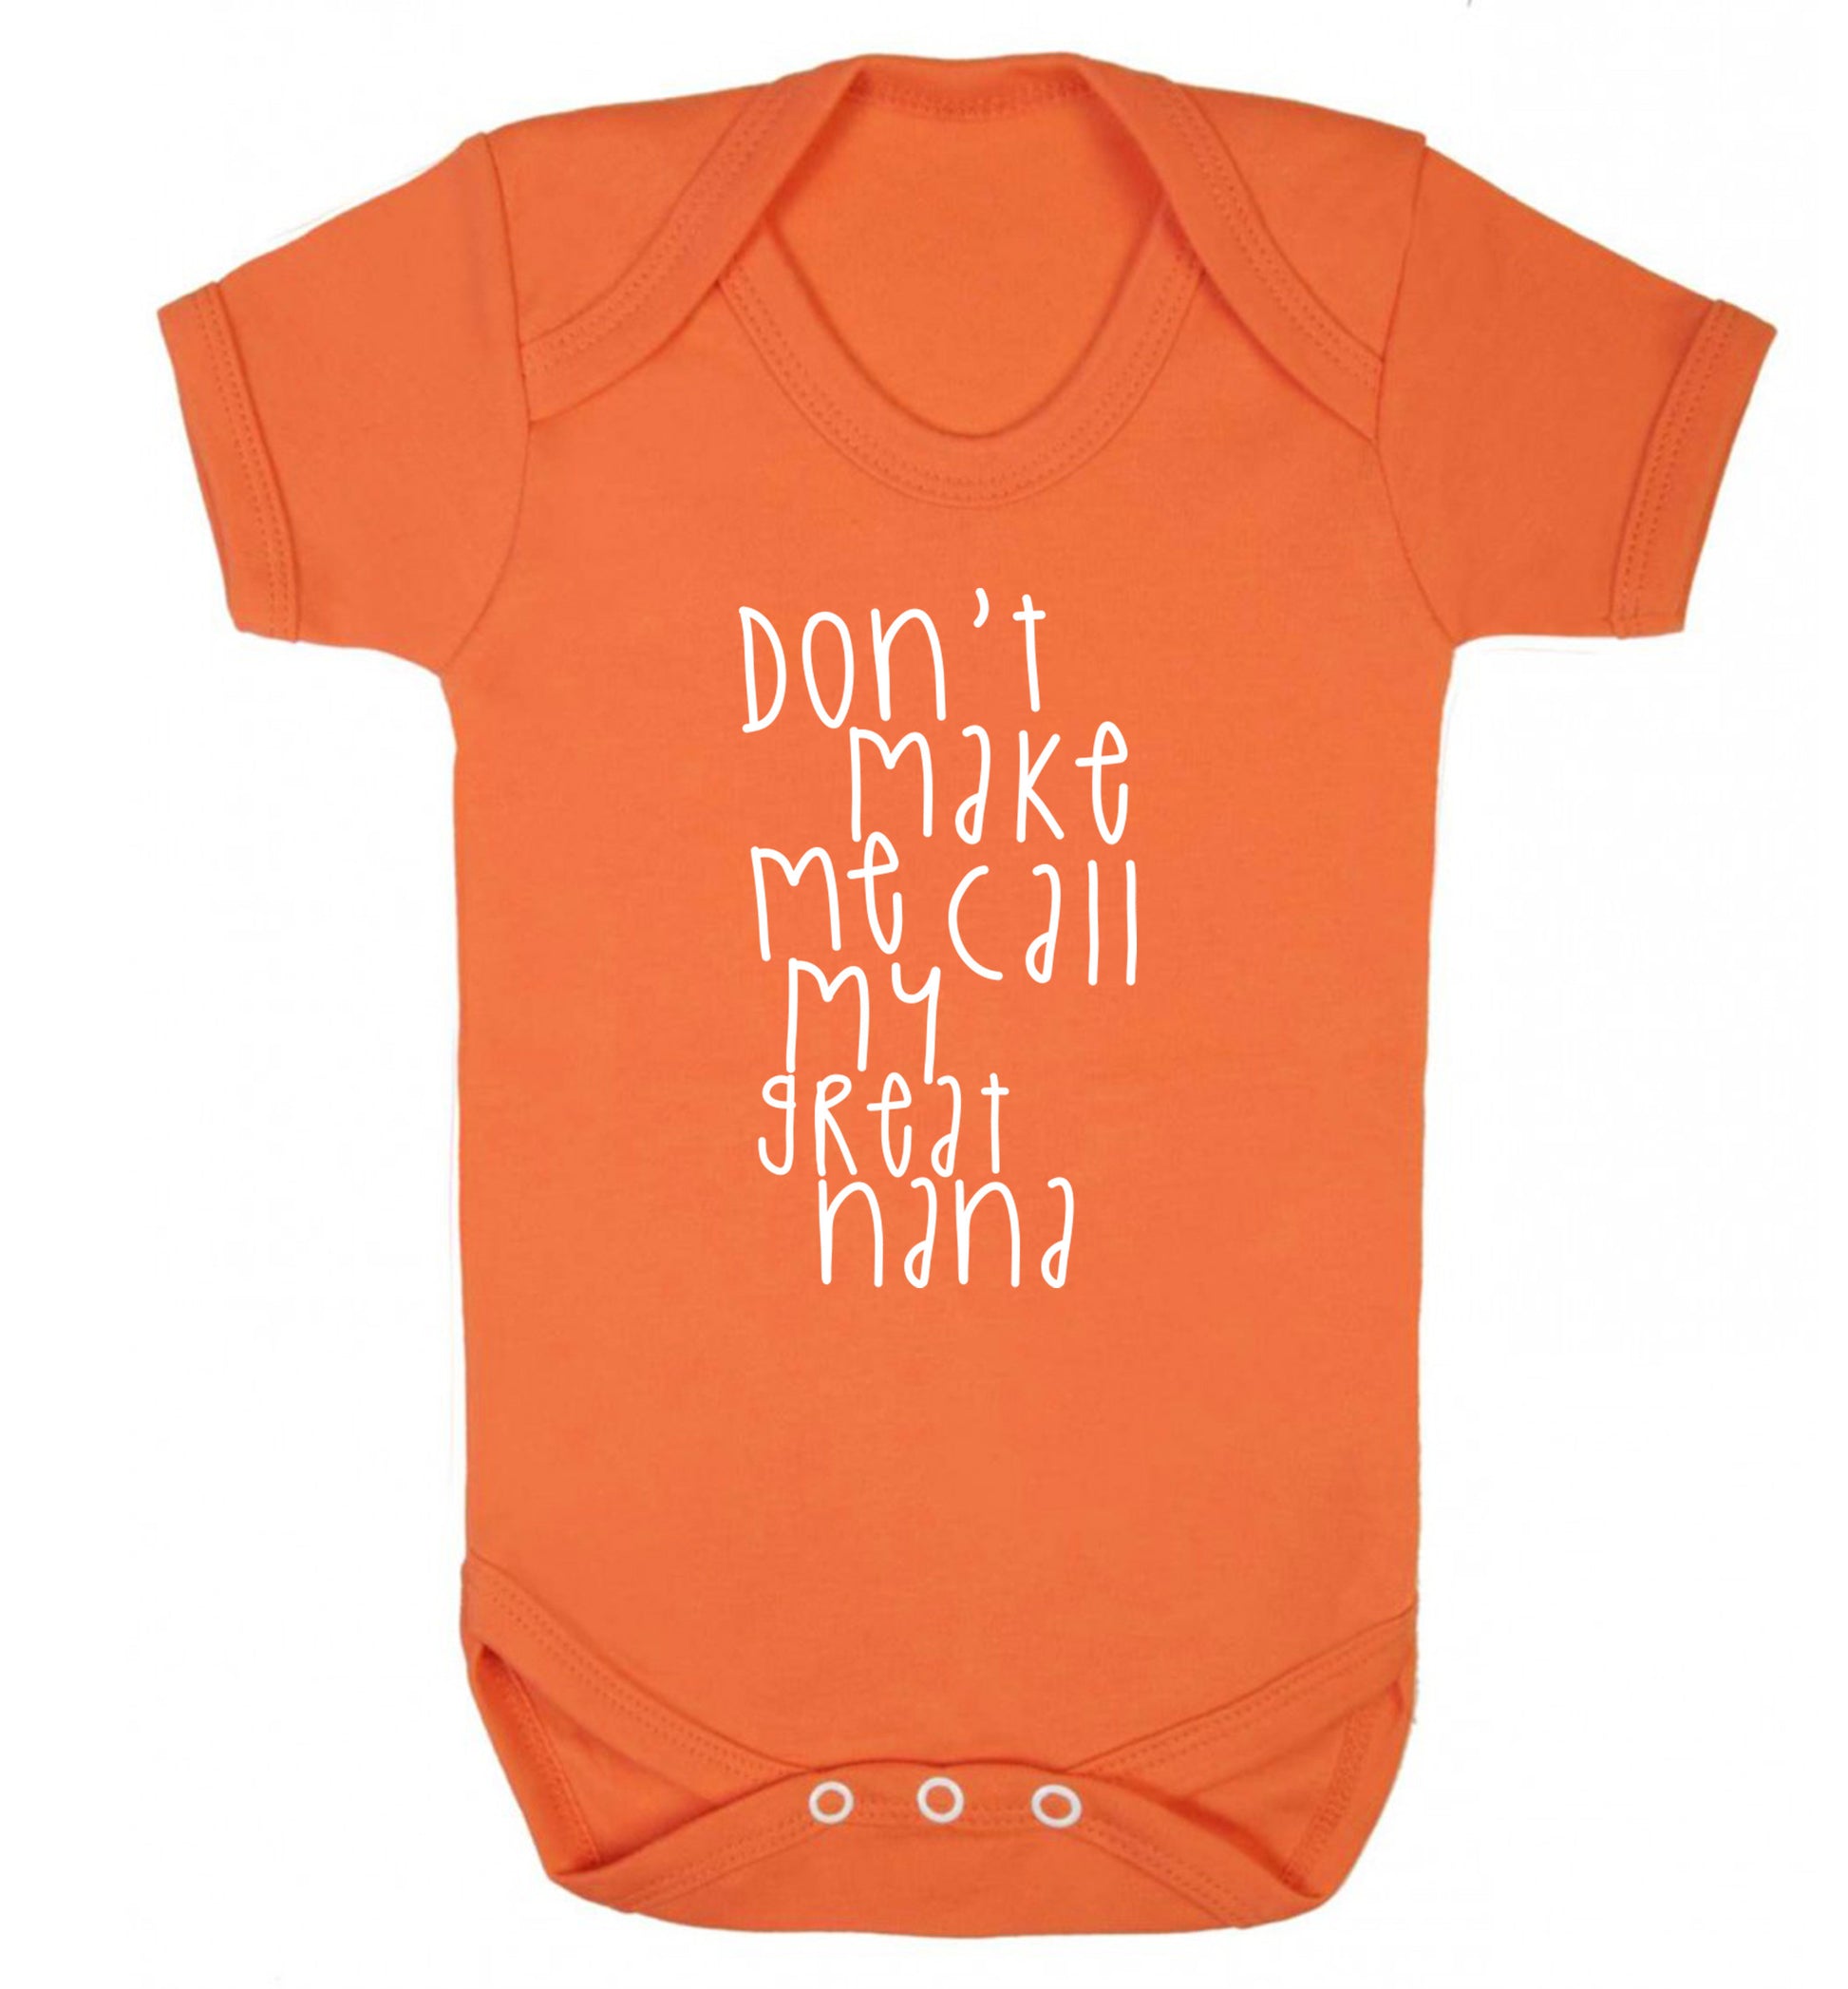 Don't make me call my great nana Baby Vest orange 18-24 months